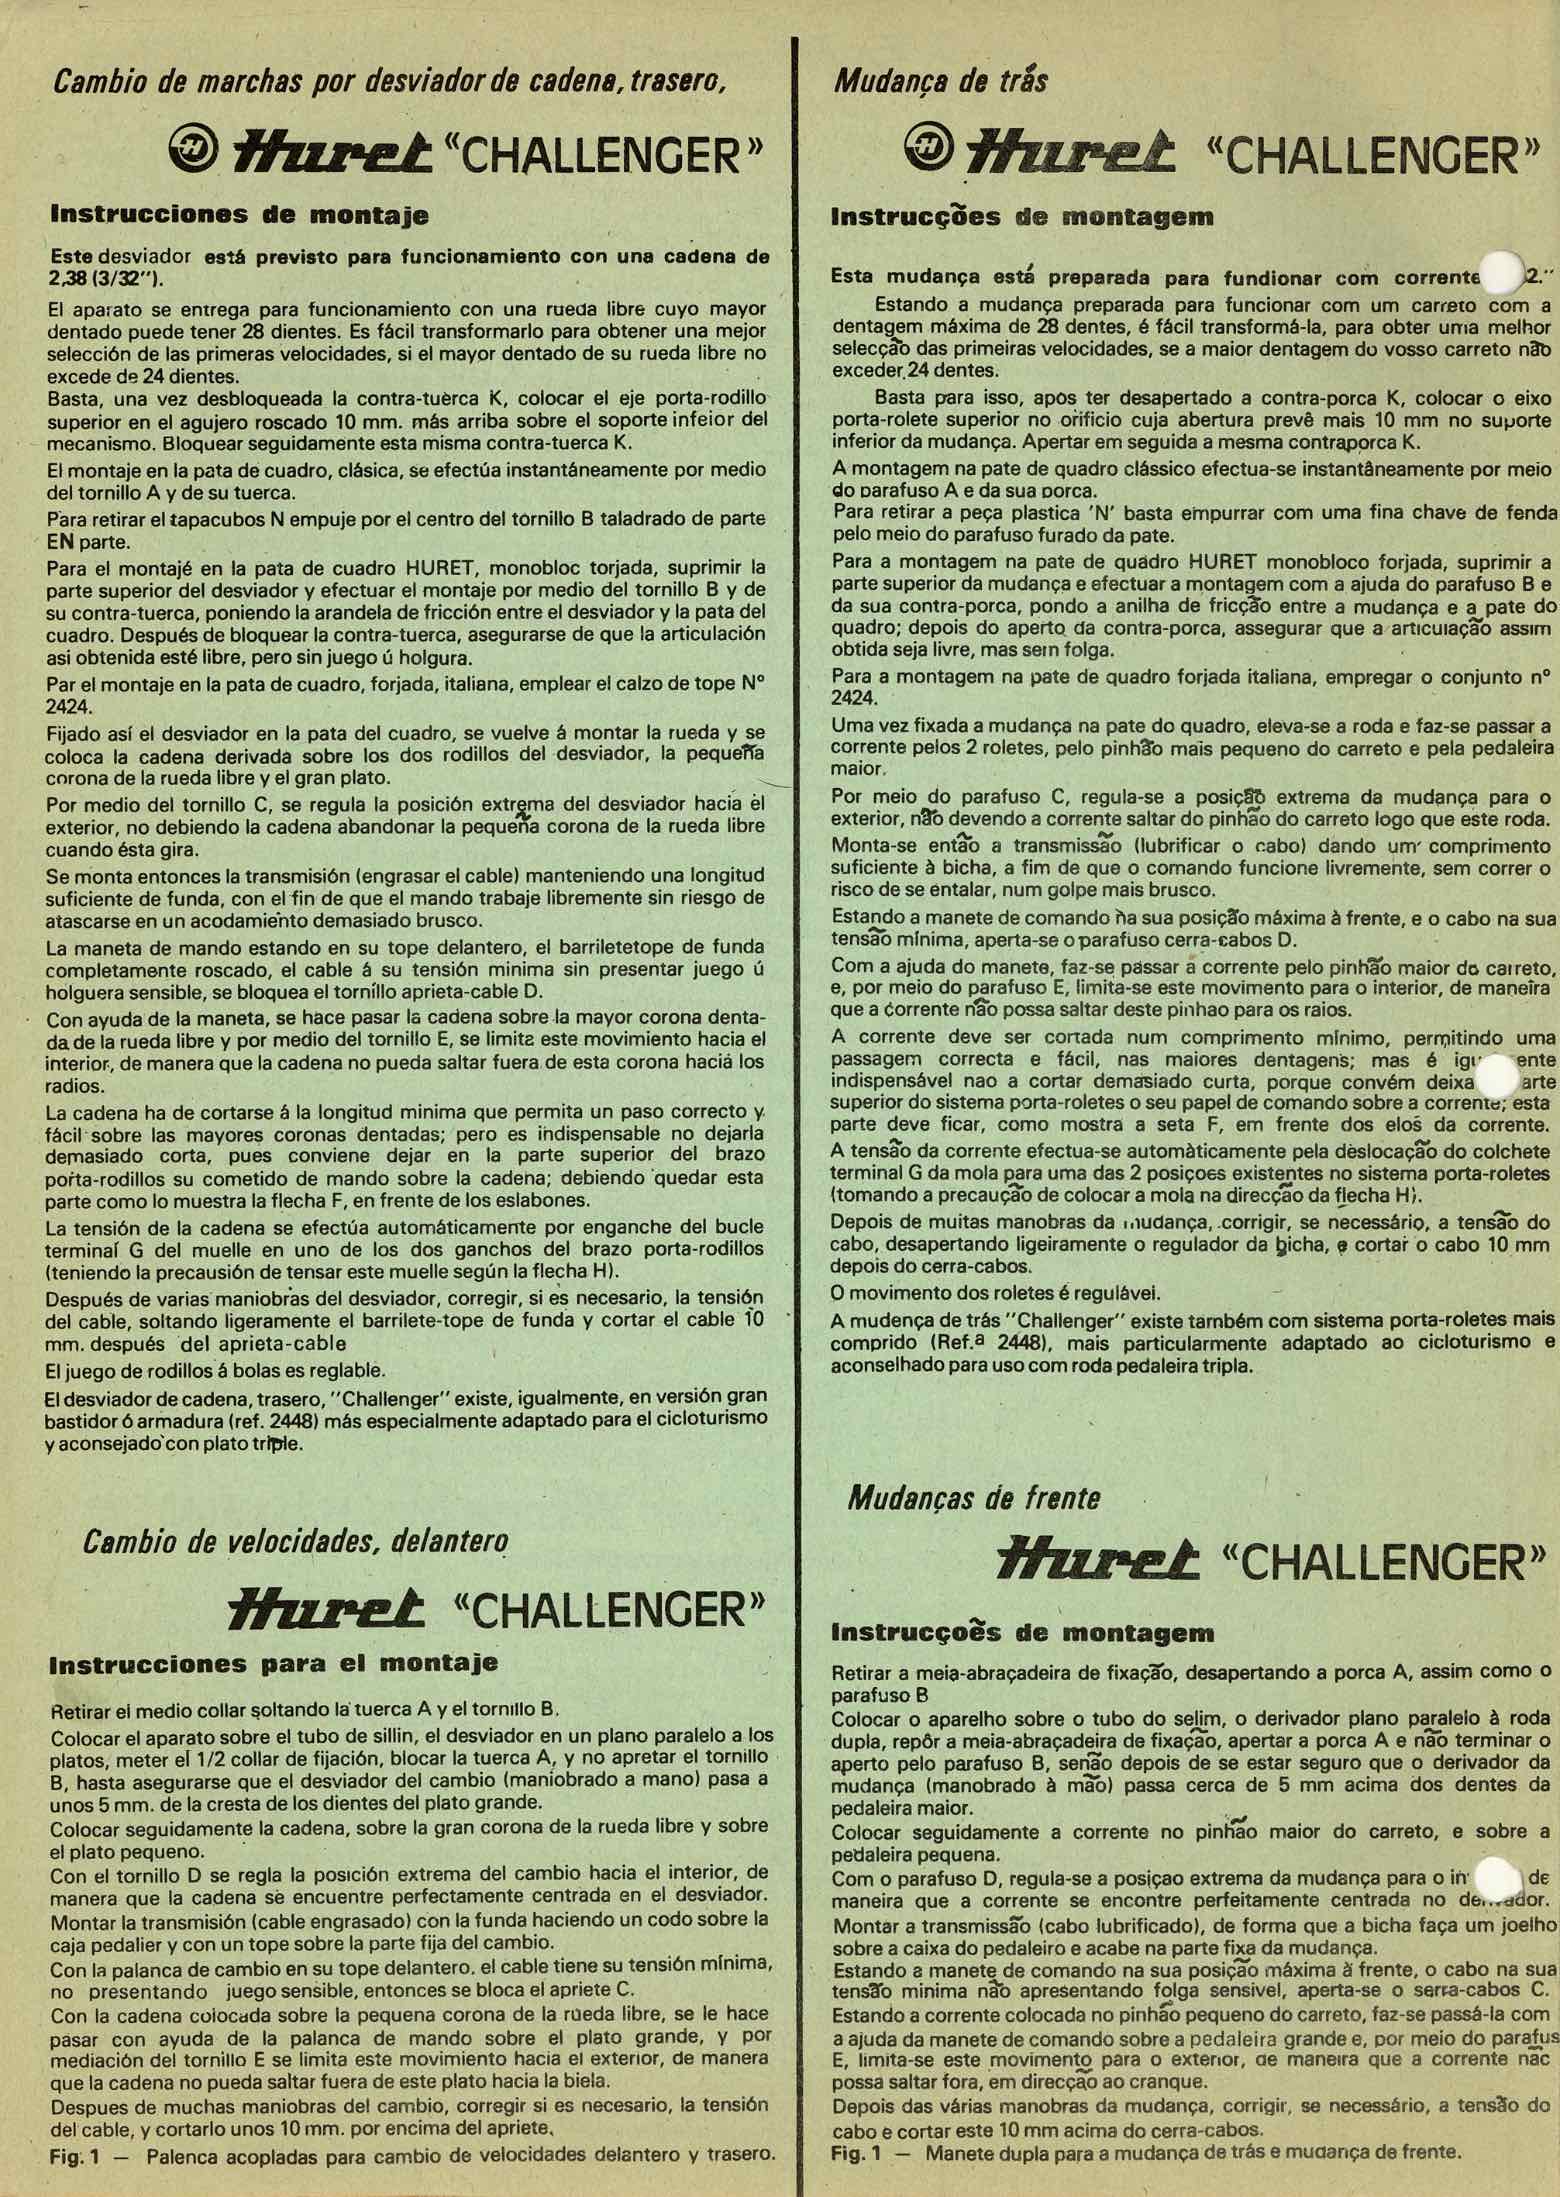 Huret Challenger - instructions scan 4 main image